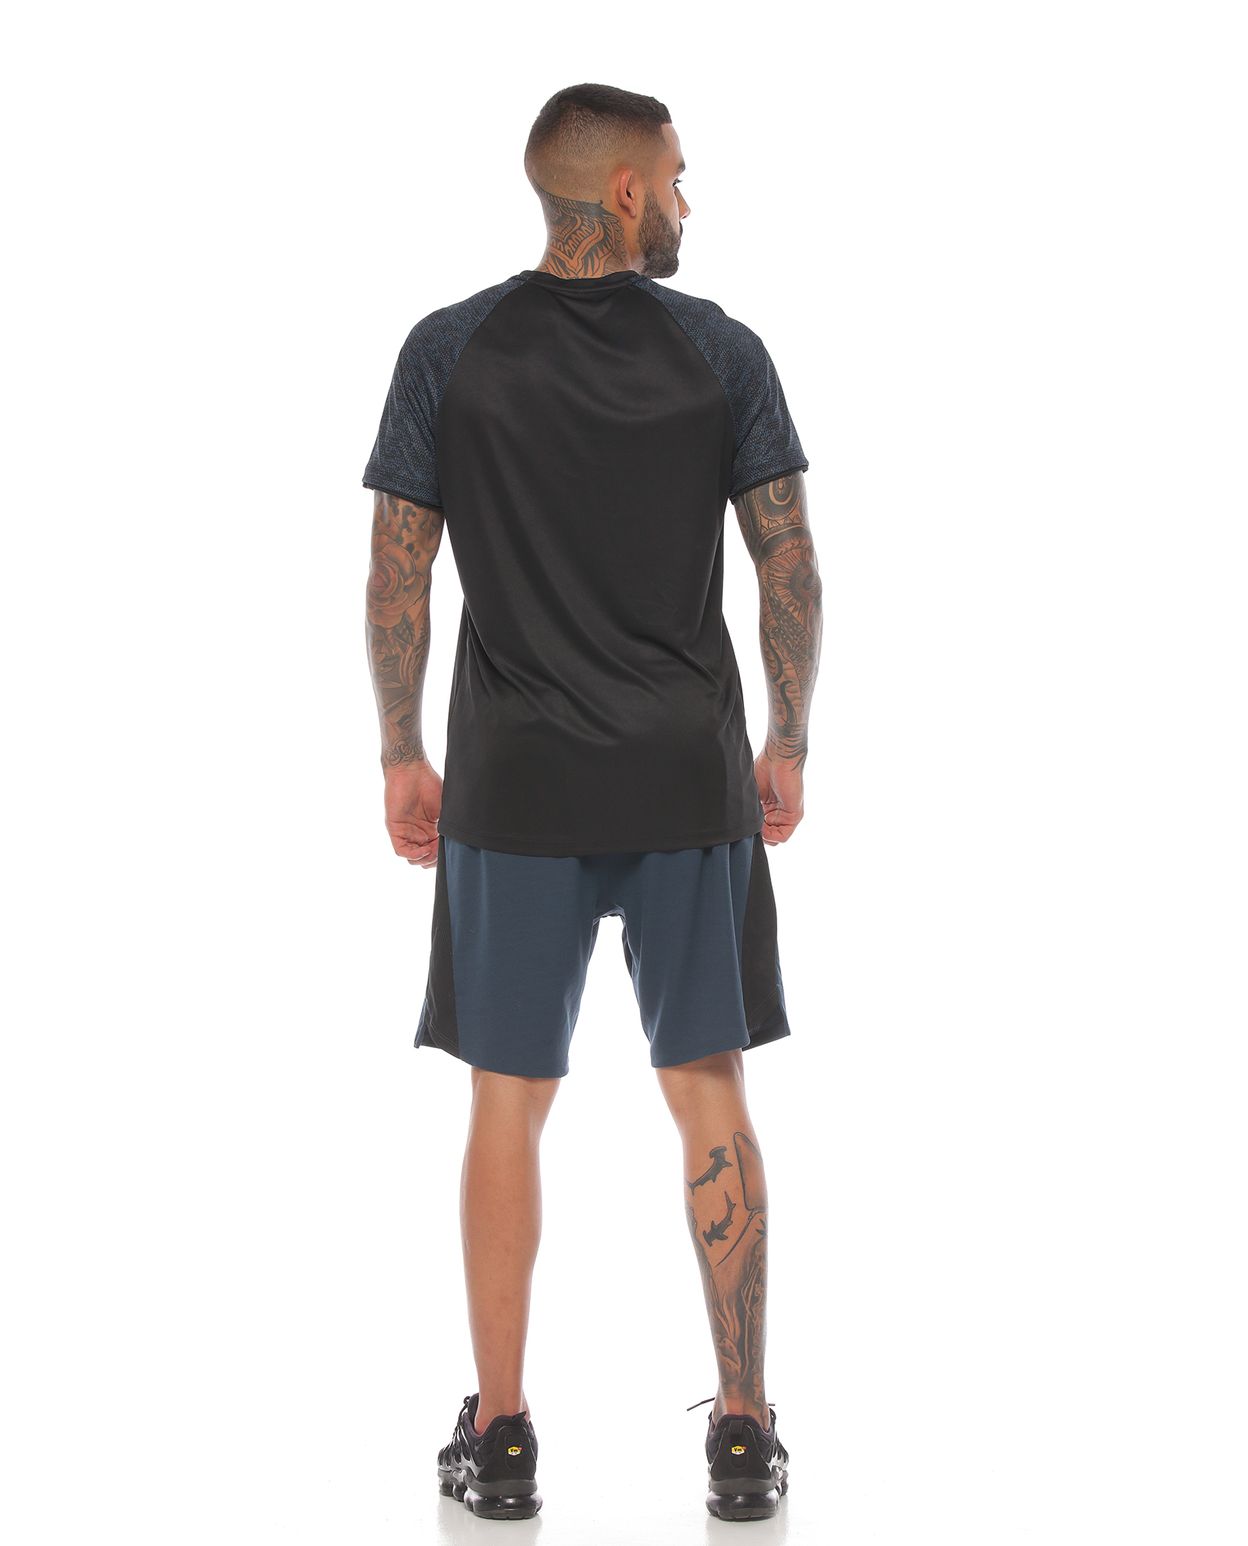 modelo con Camiseta Deportiva Negra y pantaloneta deportiva para Hombre parte trasera